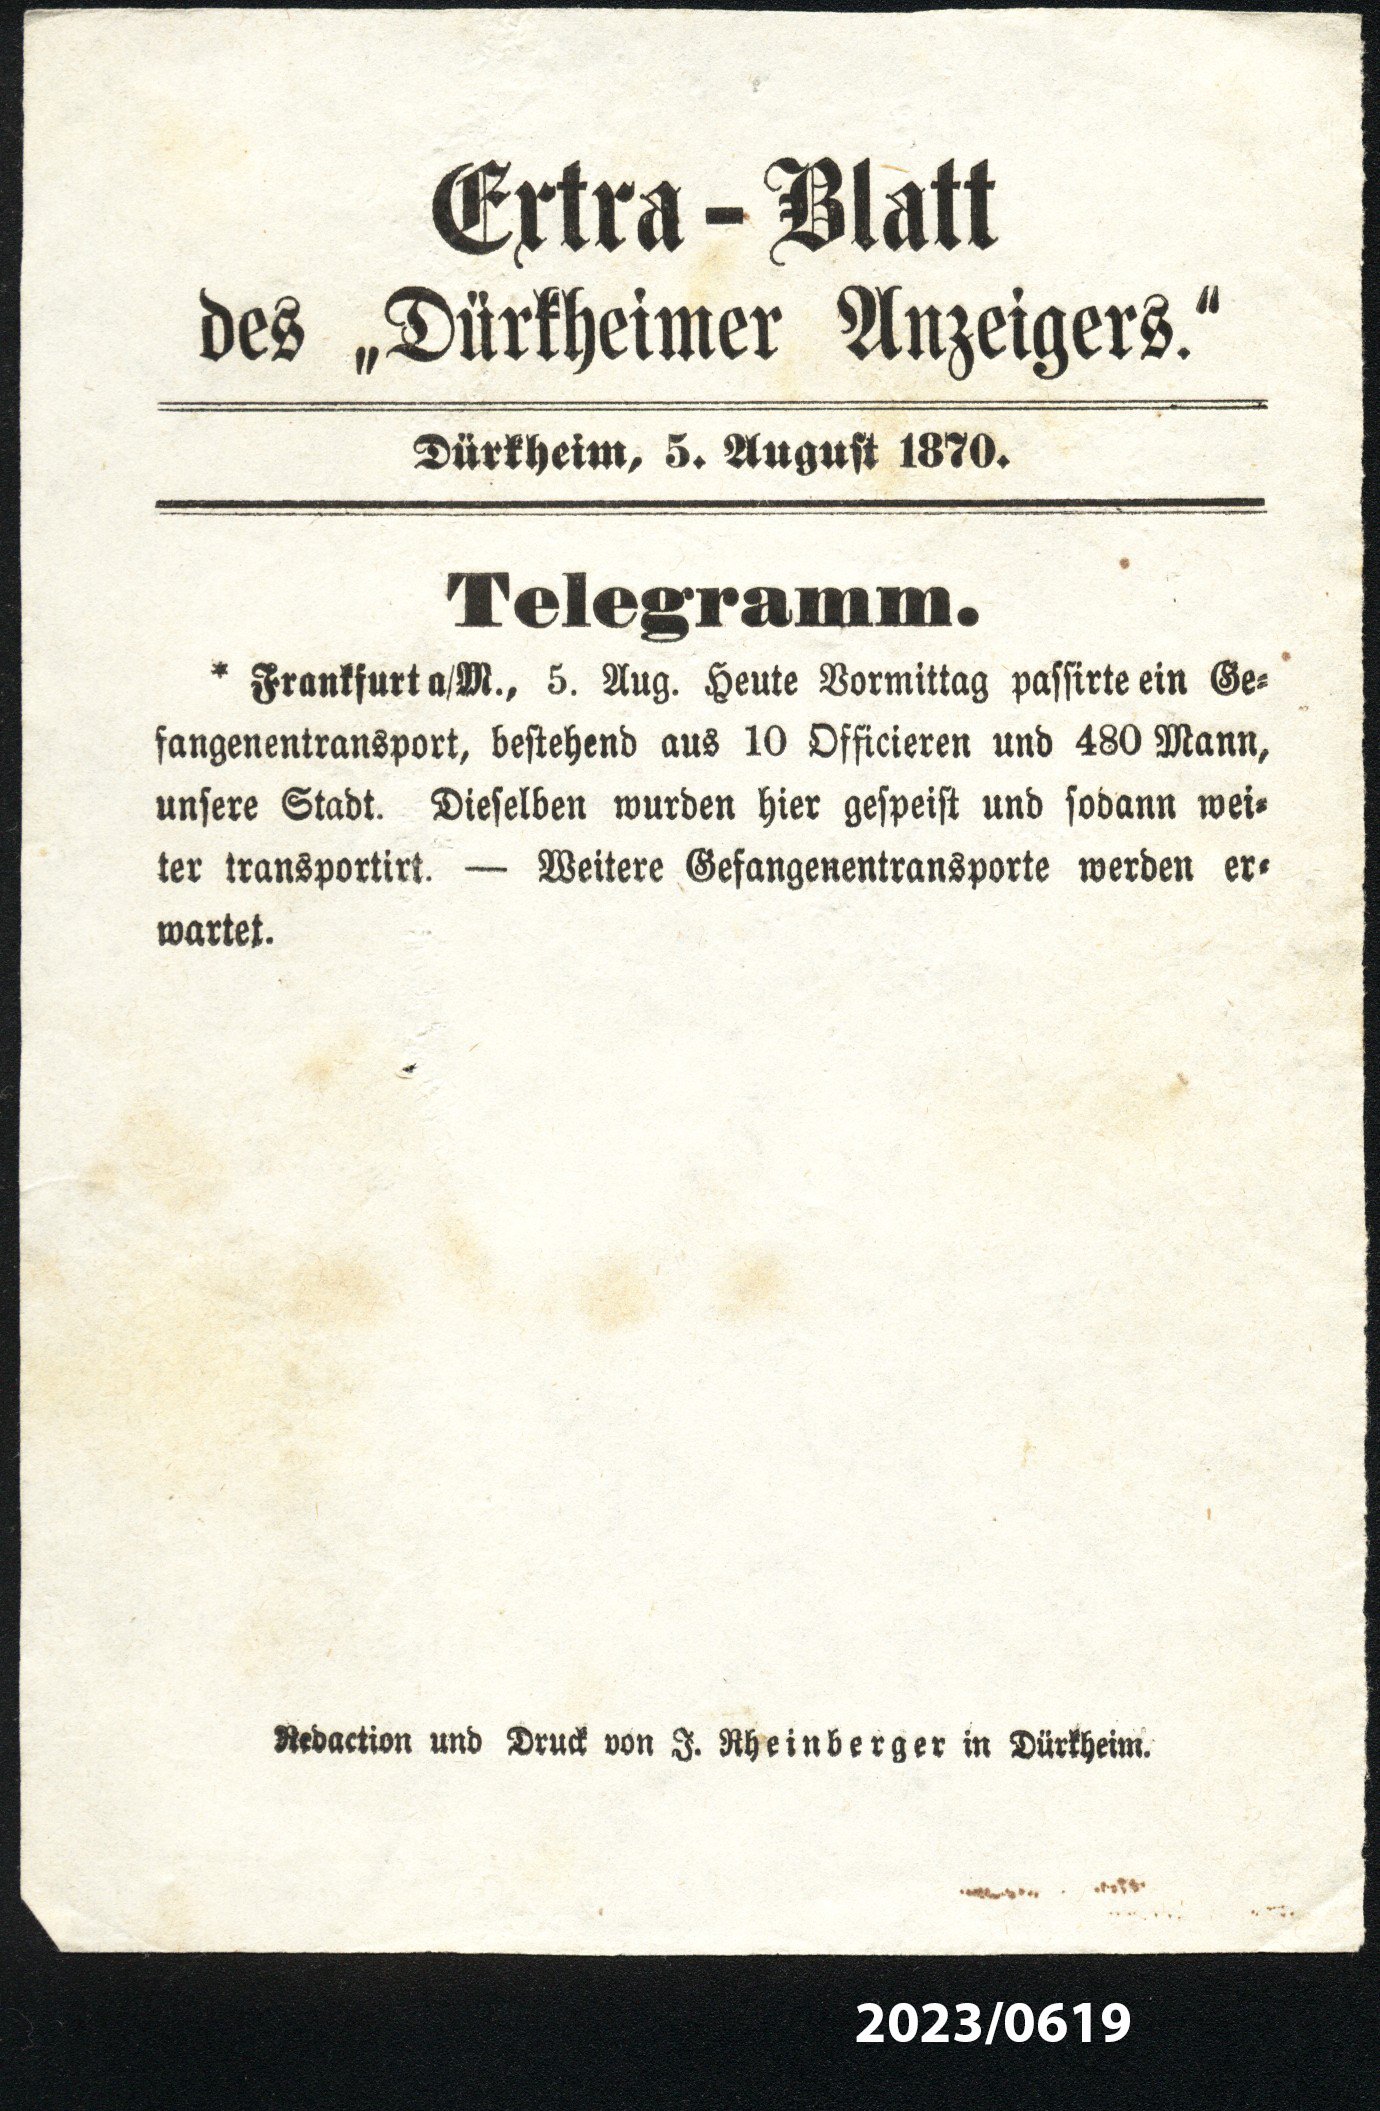 Extra-Blatt des "Dürkheimer Anzeigers" 5.8.1870 (Stadtmuseum Bad Dürkheim im Kulturzentrum Haus Catoir CC BY-NC-SA)